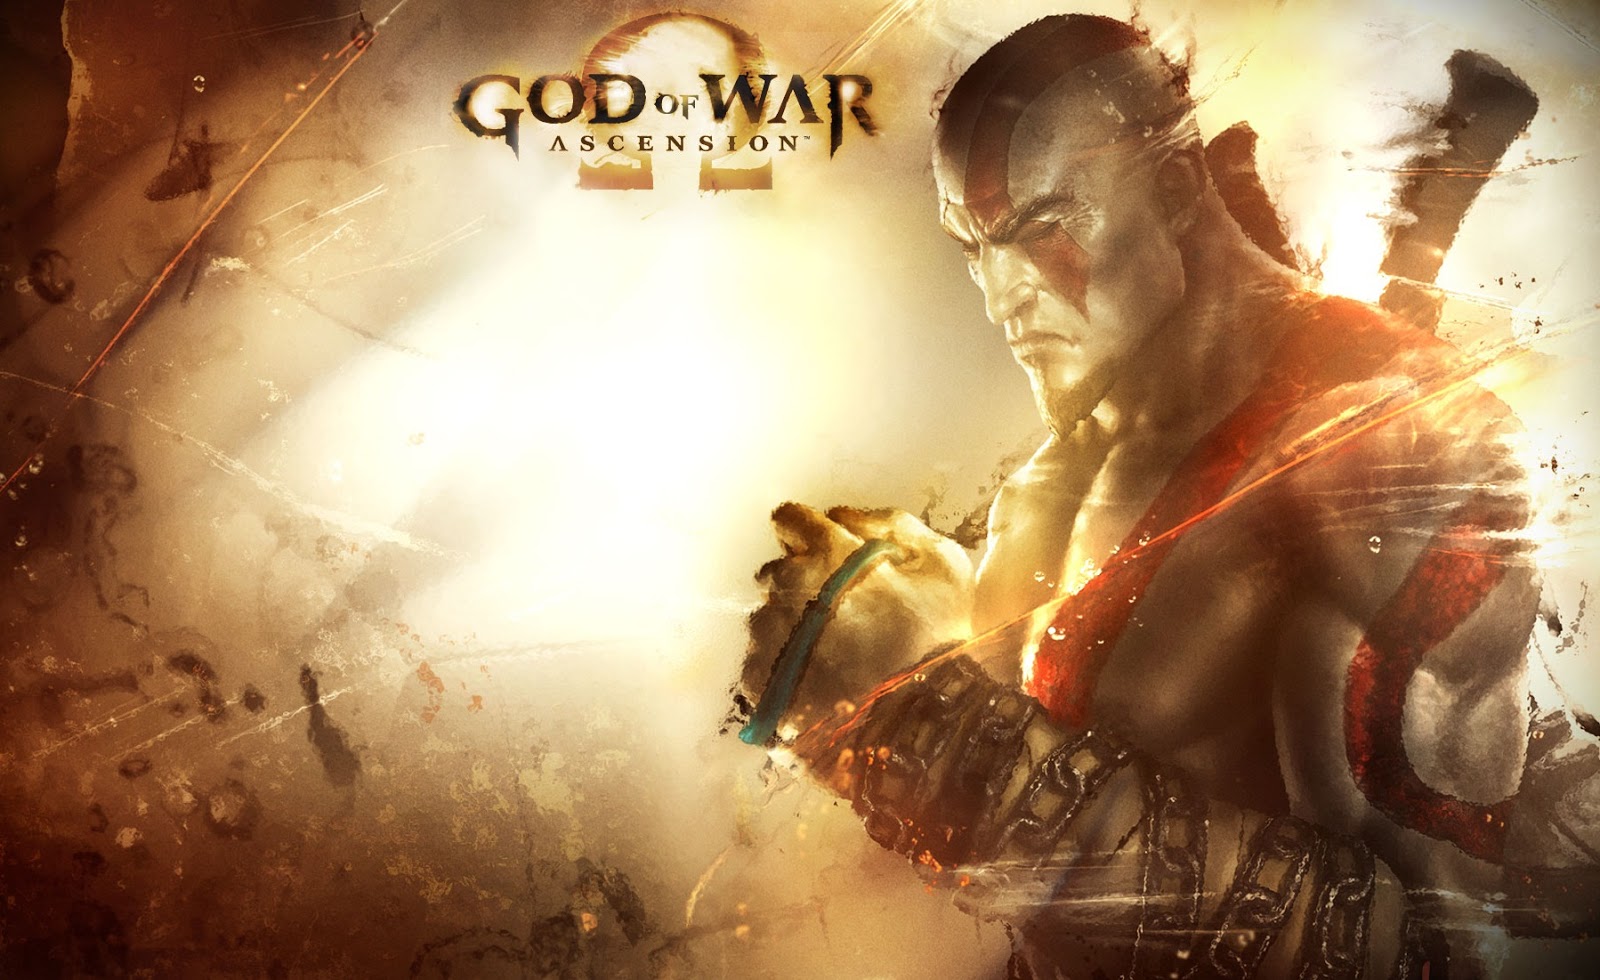 god of war 3 full pc game download free full version compressed